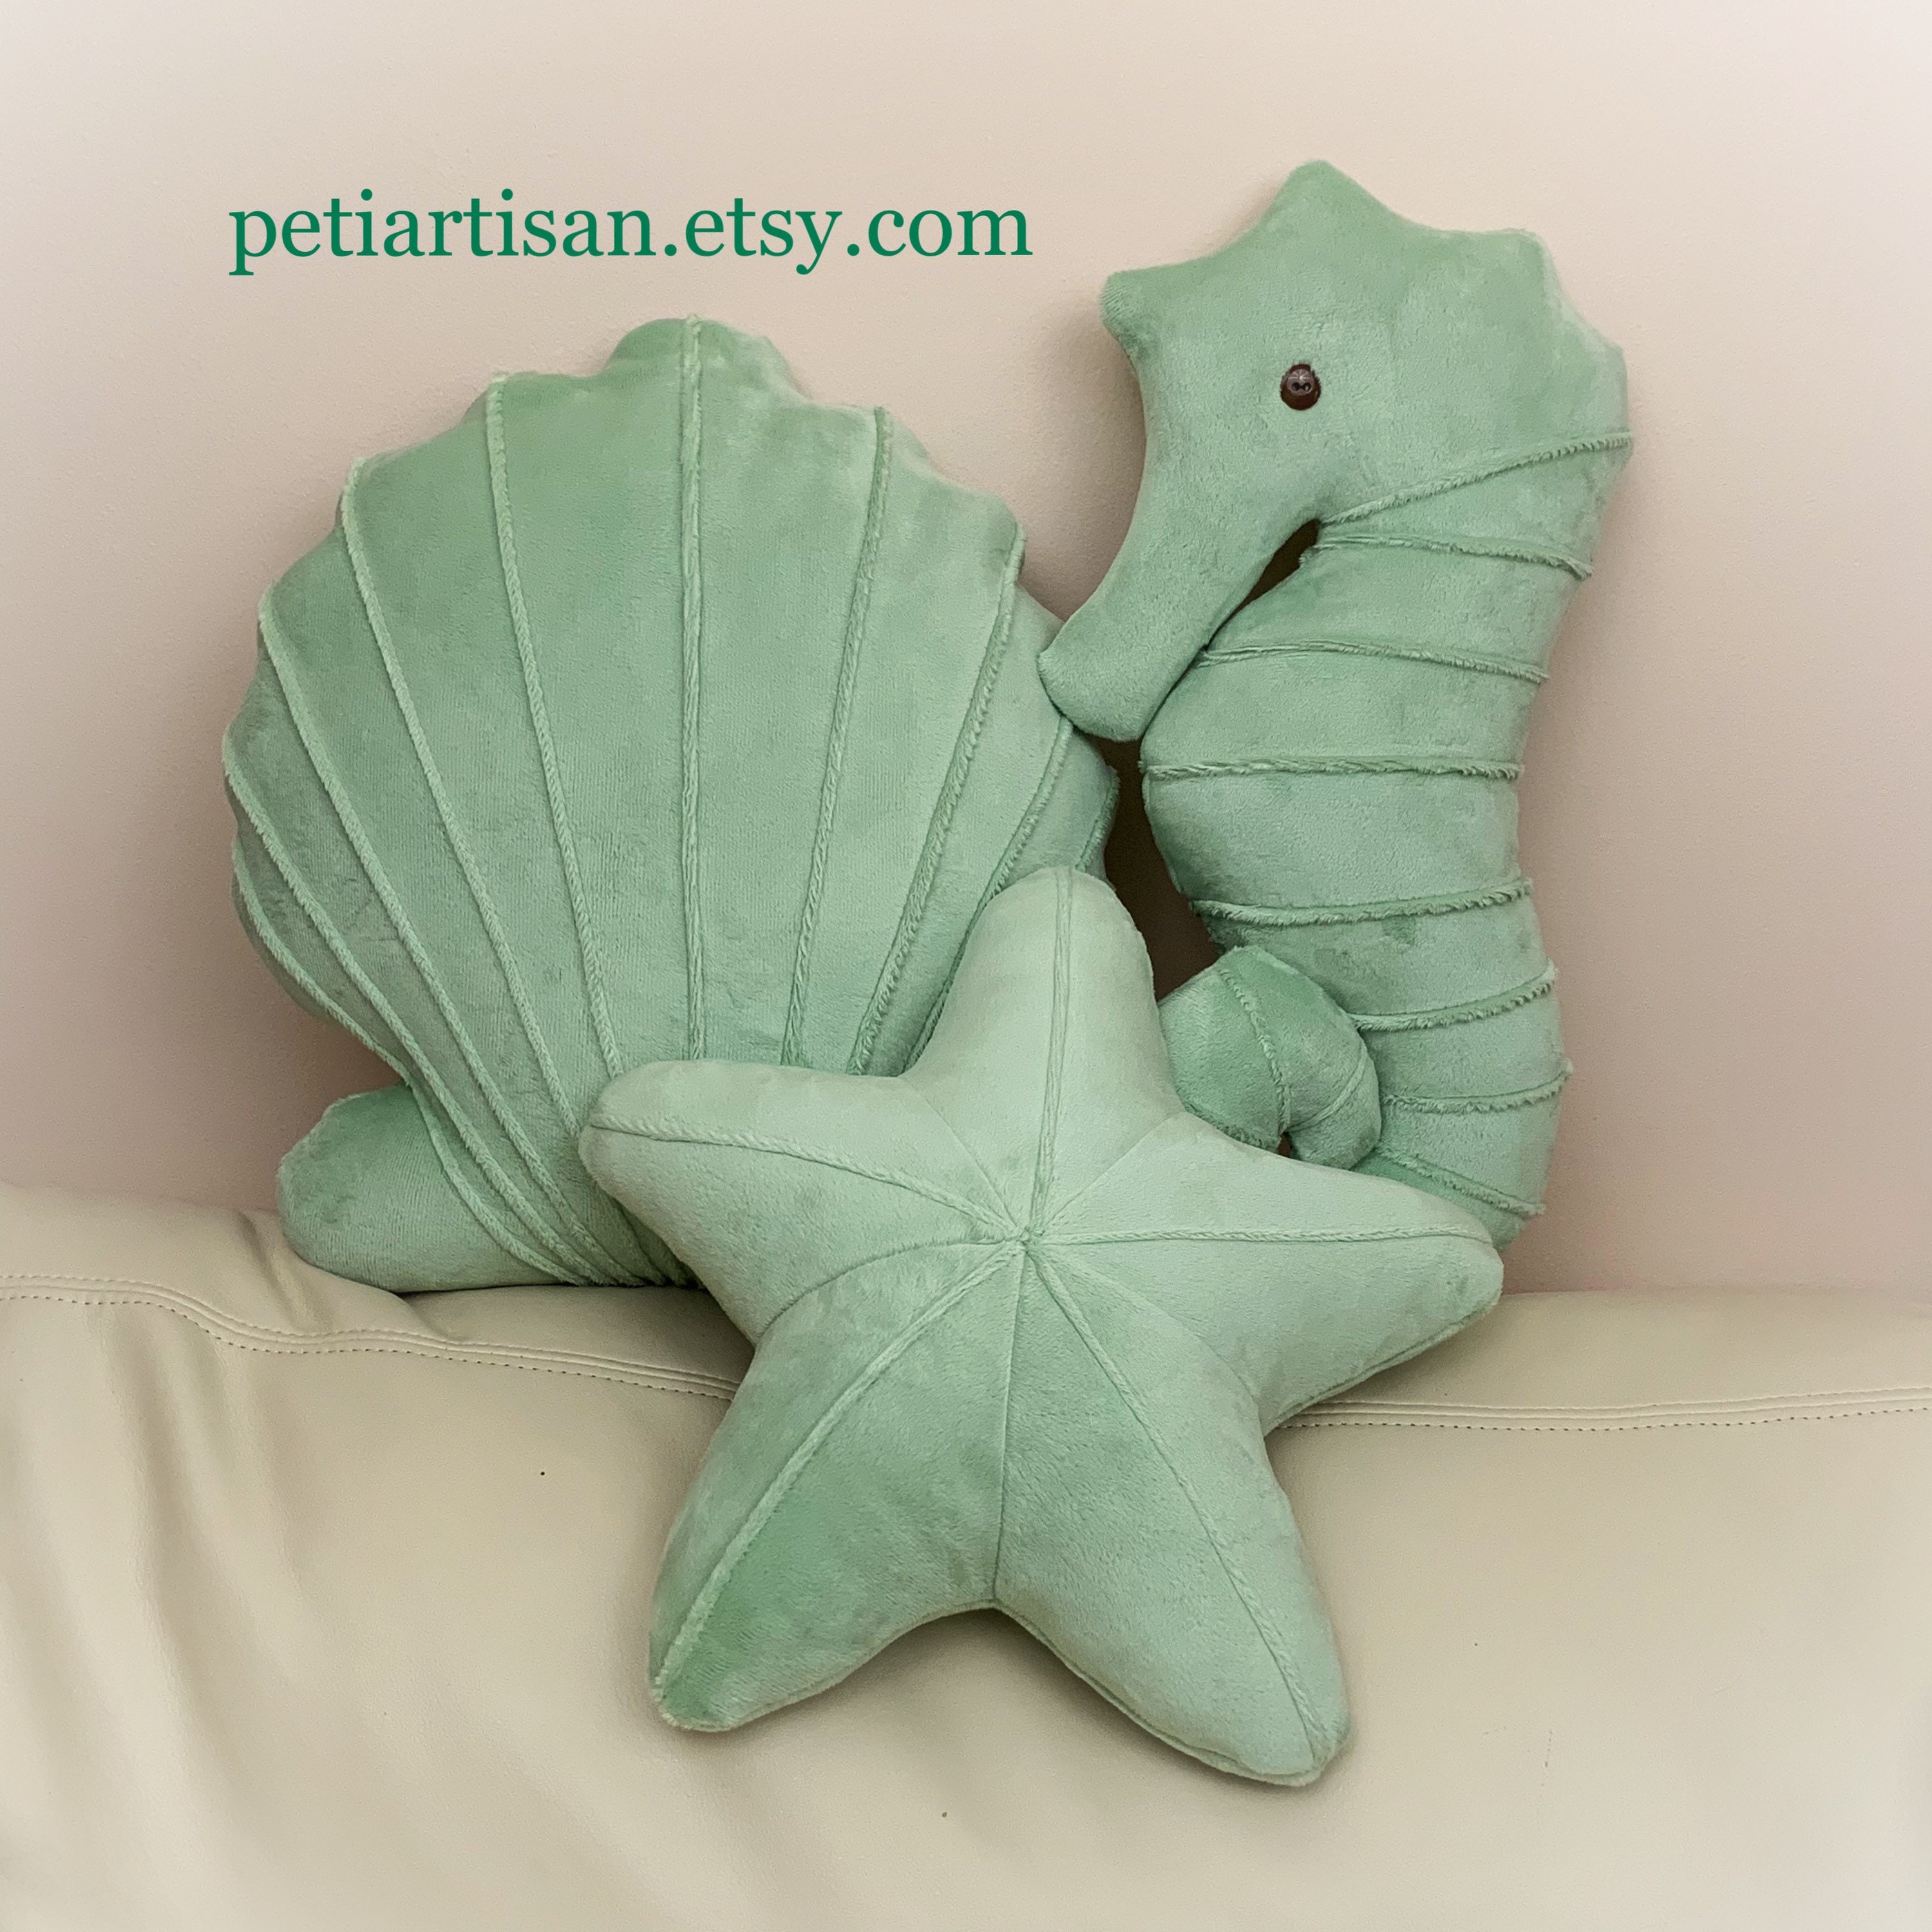 AELS Coastal Throw Pillows Set of 3, Starfish Shell Seahorse Pillows, Beach Ocean Nautical Themed Smooth Soft Minky Decorative Throw Pillows, Cute